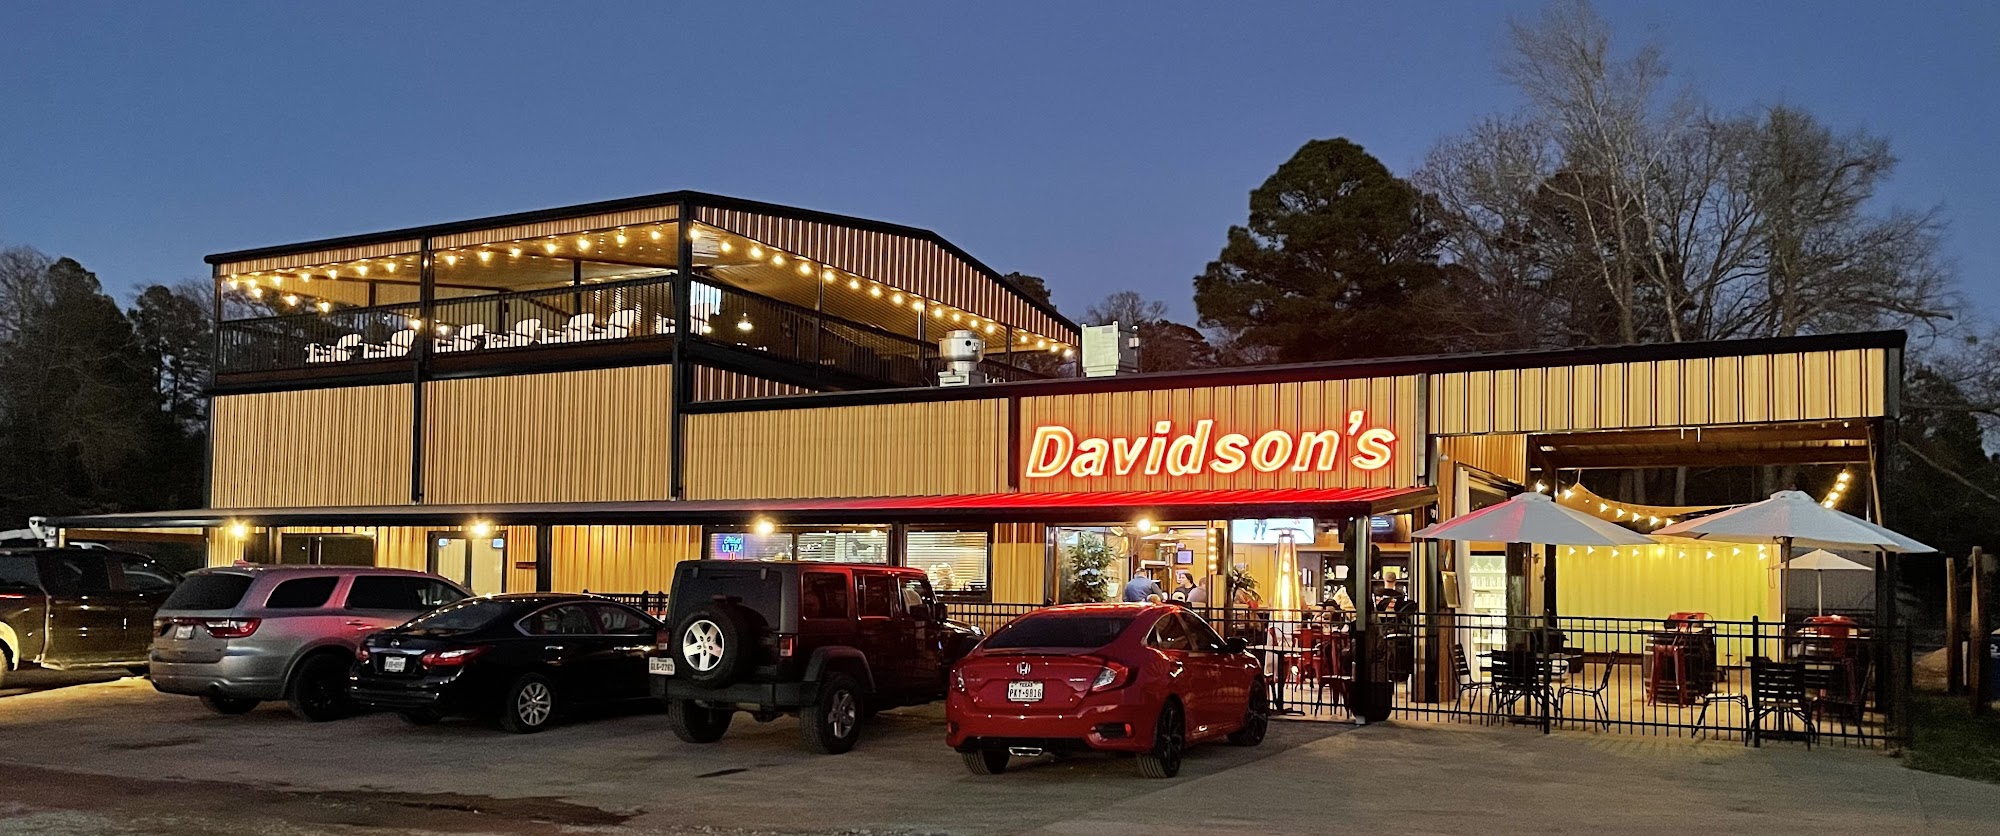 Davidson’s